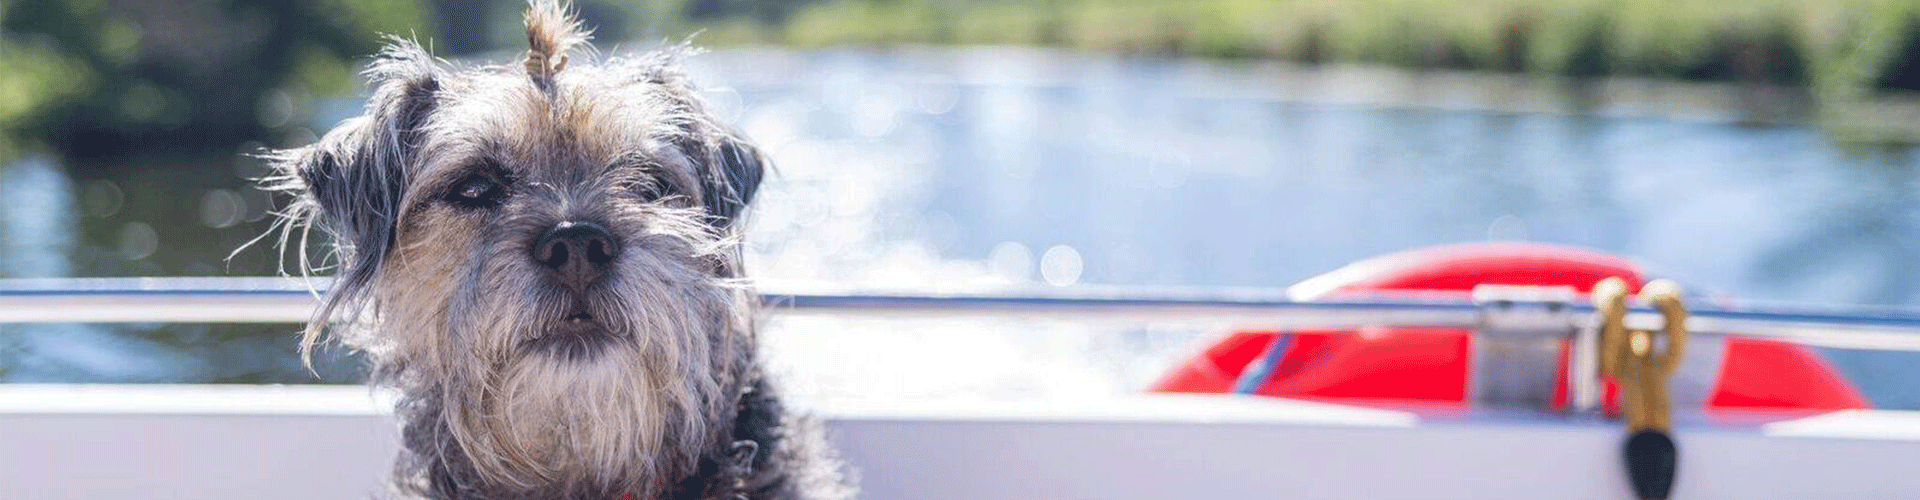 Le Boat - Dog friendly holidays